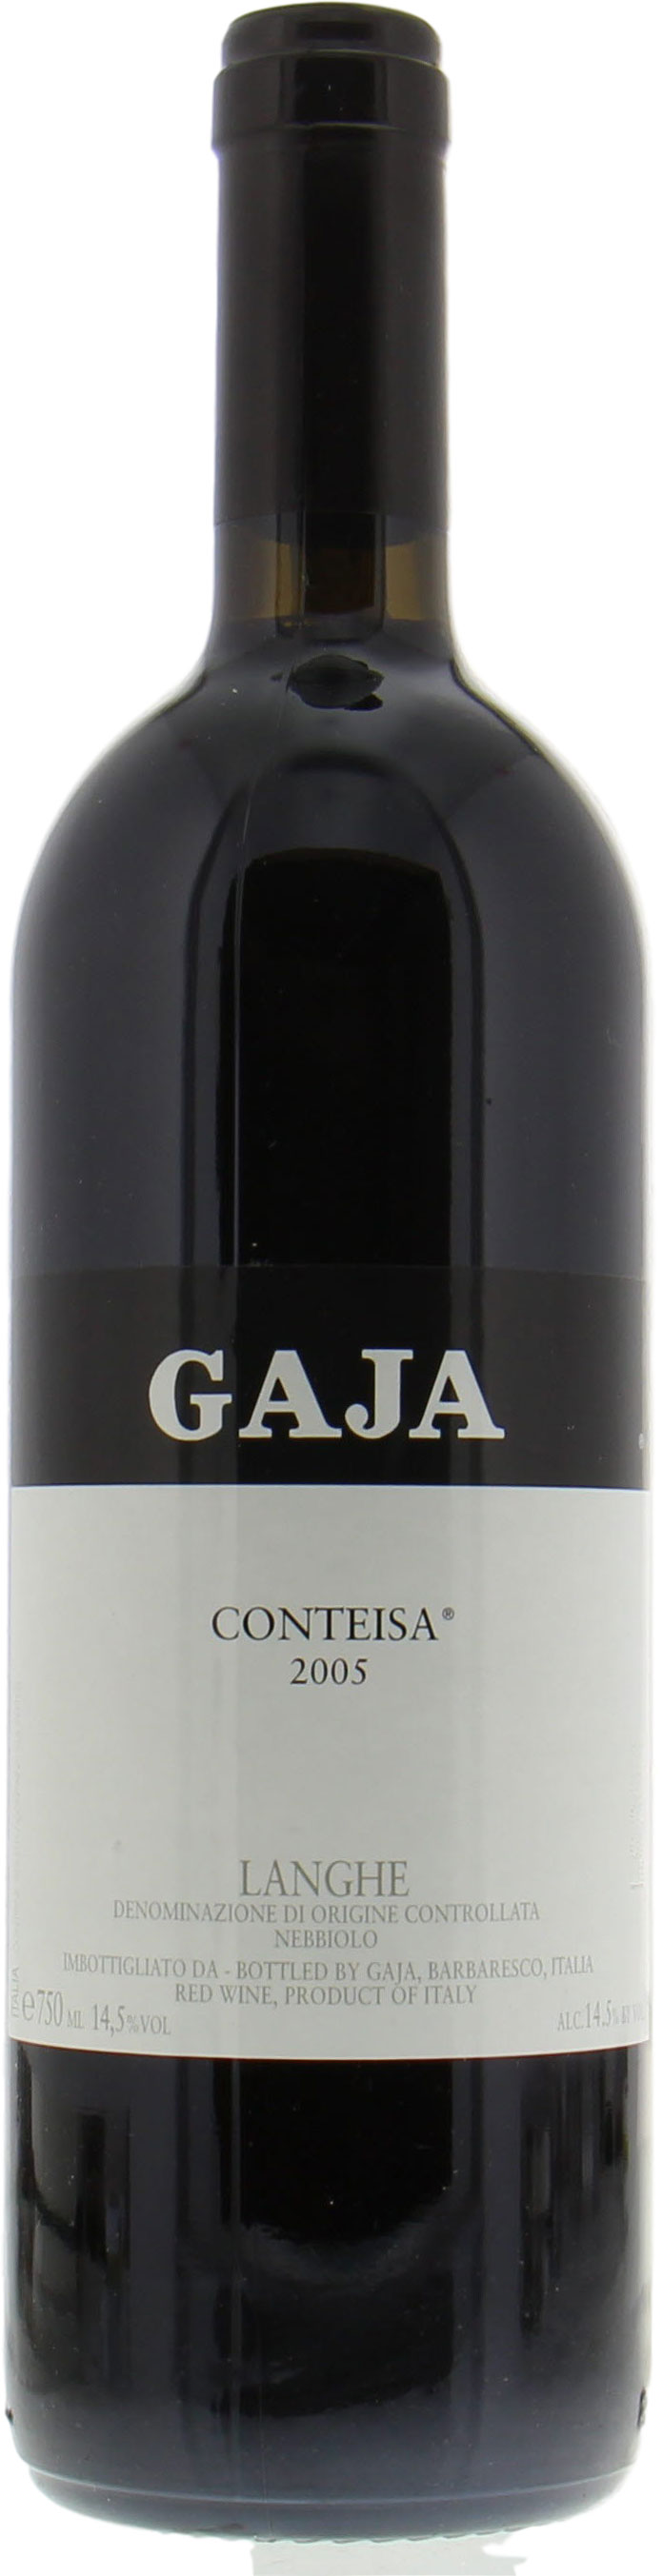 Gaja - Conteisa 2005 Perfect